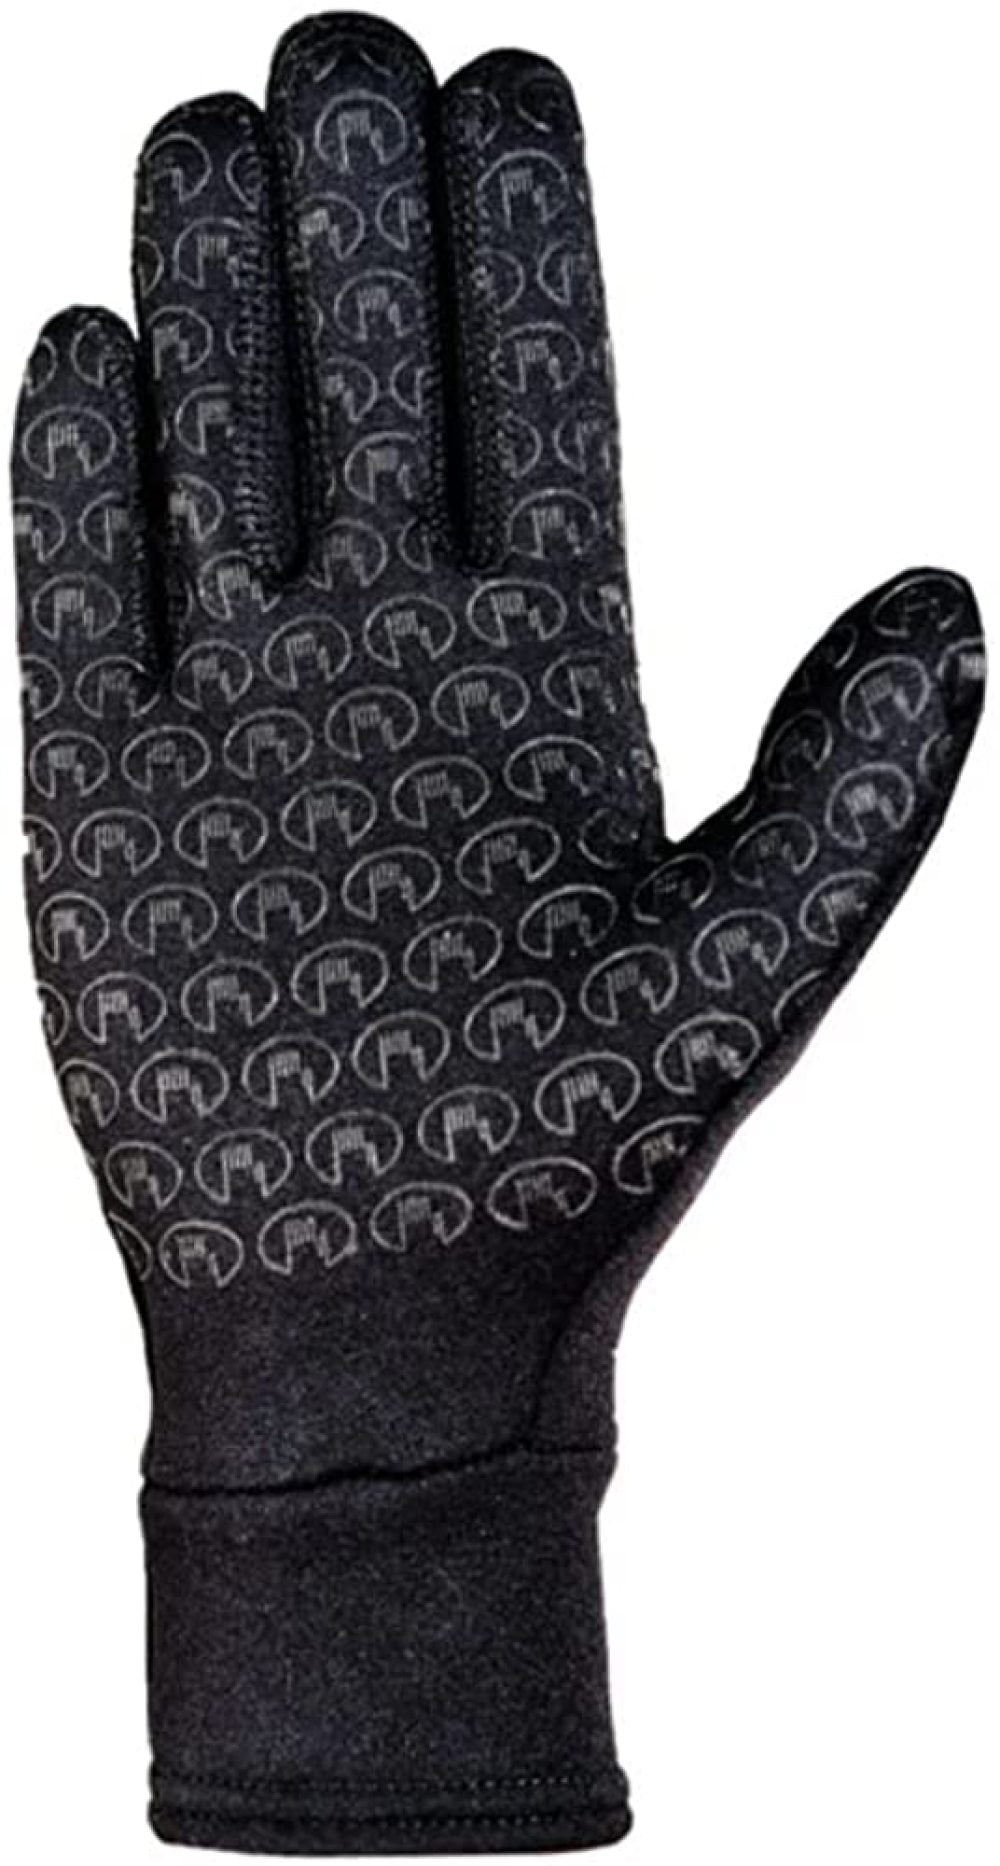 Roeckl Warwick Glove